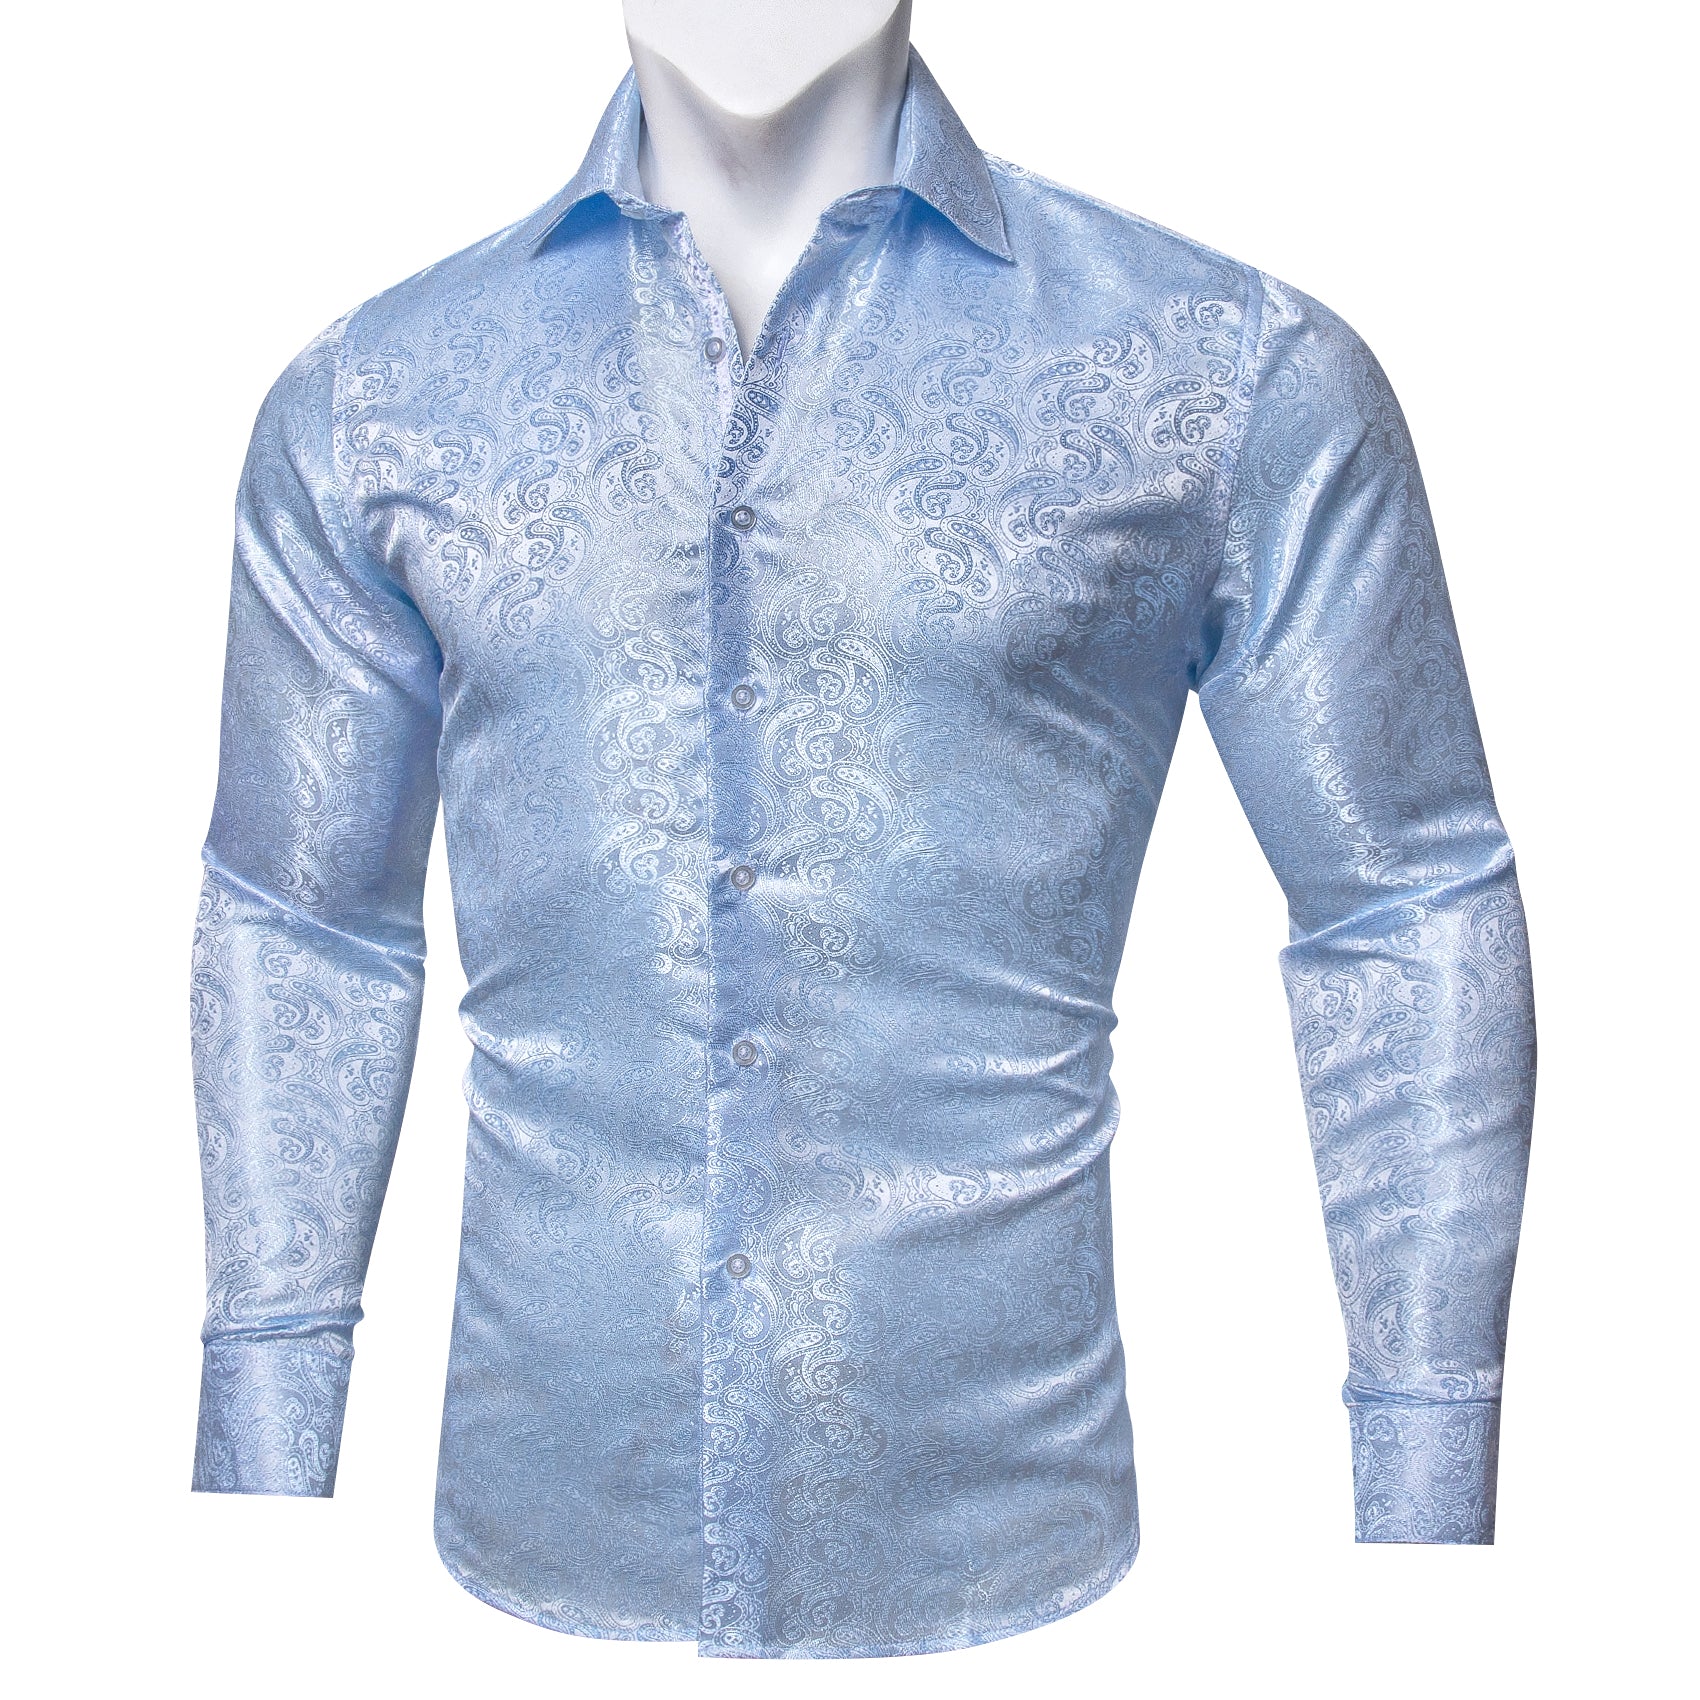 Barry.wang Sky Blue Paisley Silk Shirt